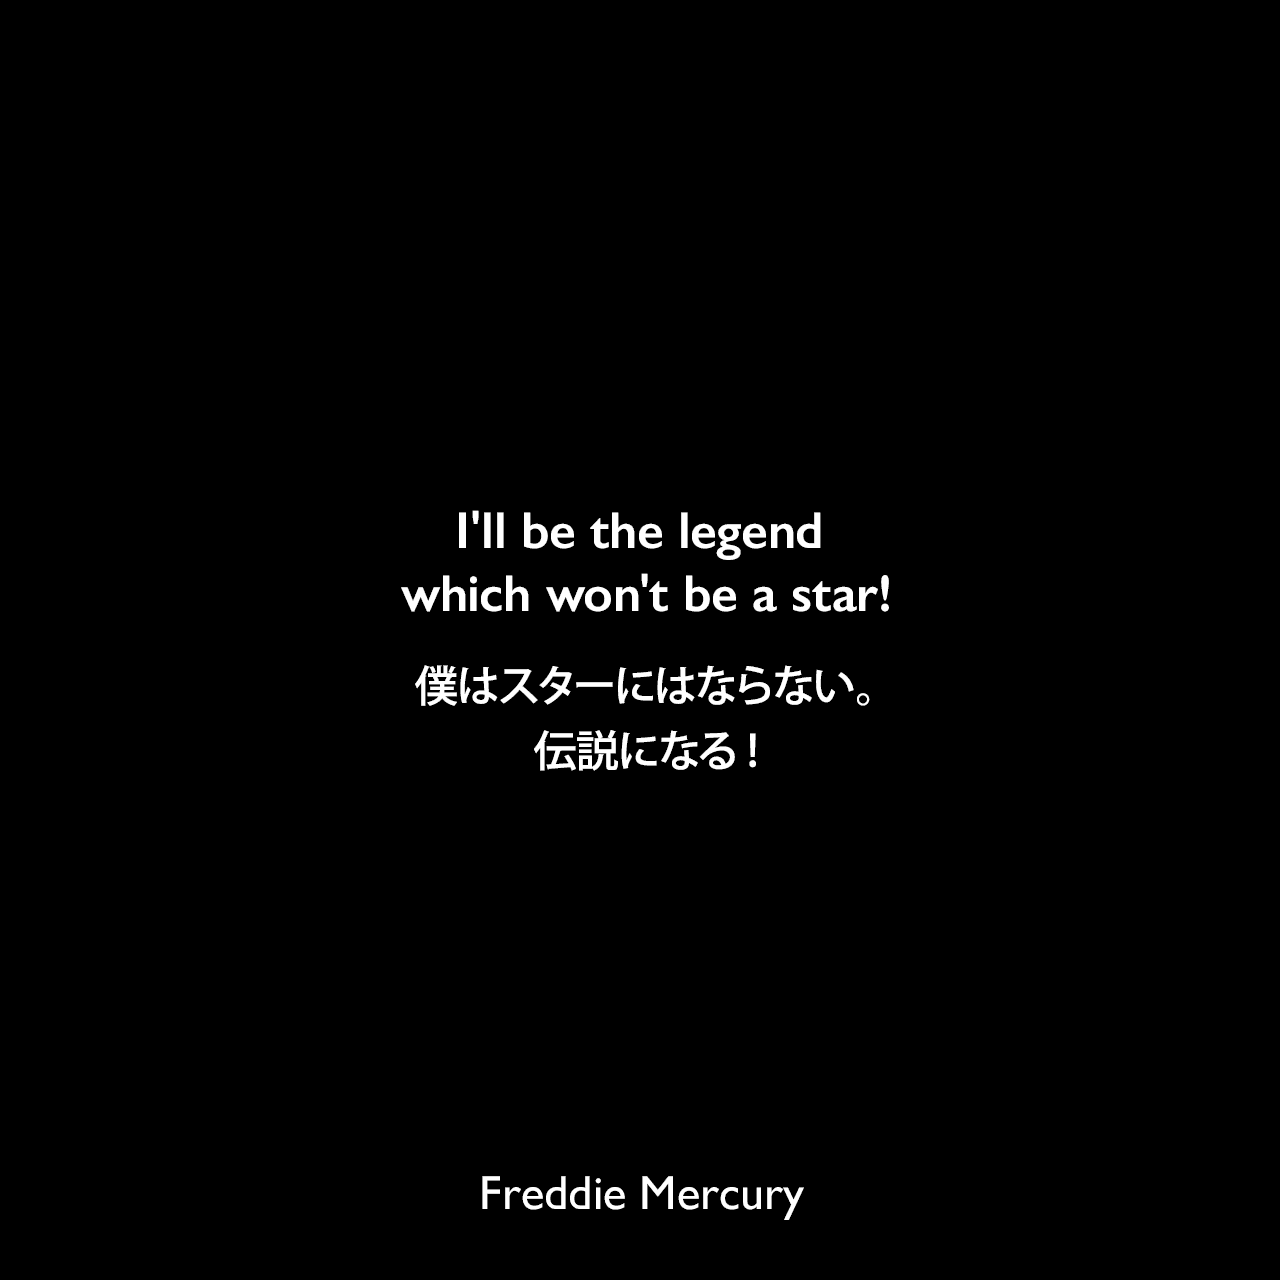 I'll be the legend which won't be a star!僕はスターにはならない。伝説になる!Freddie Mercury